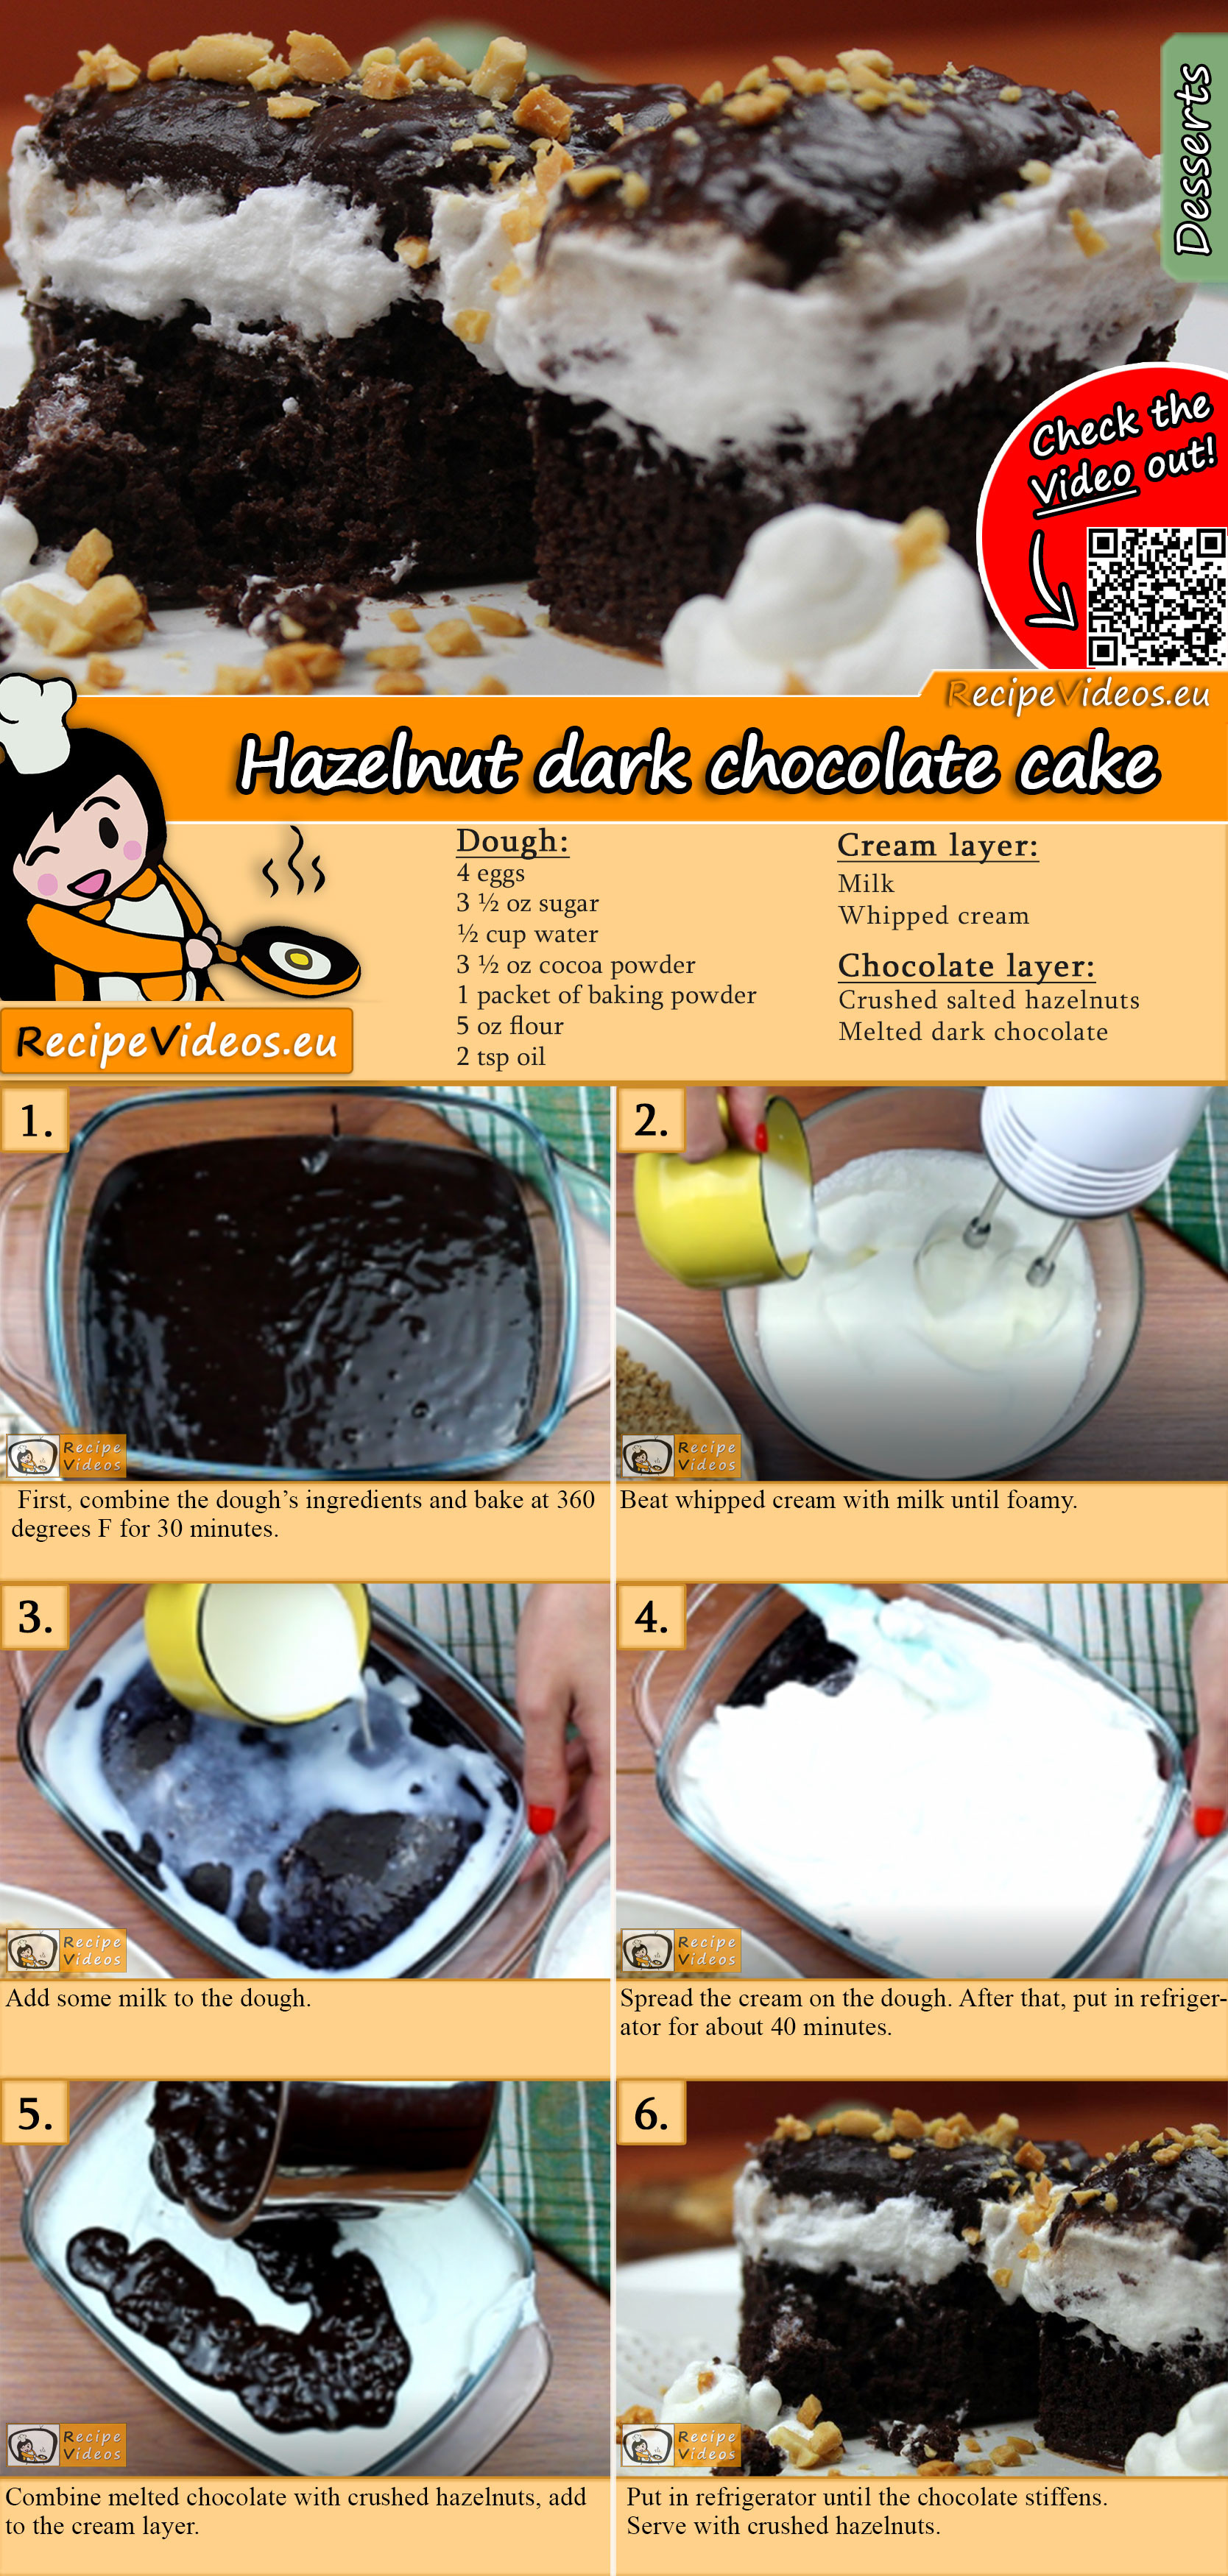 Hazelnut dark chocolate cake recipe with video